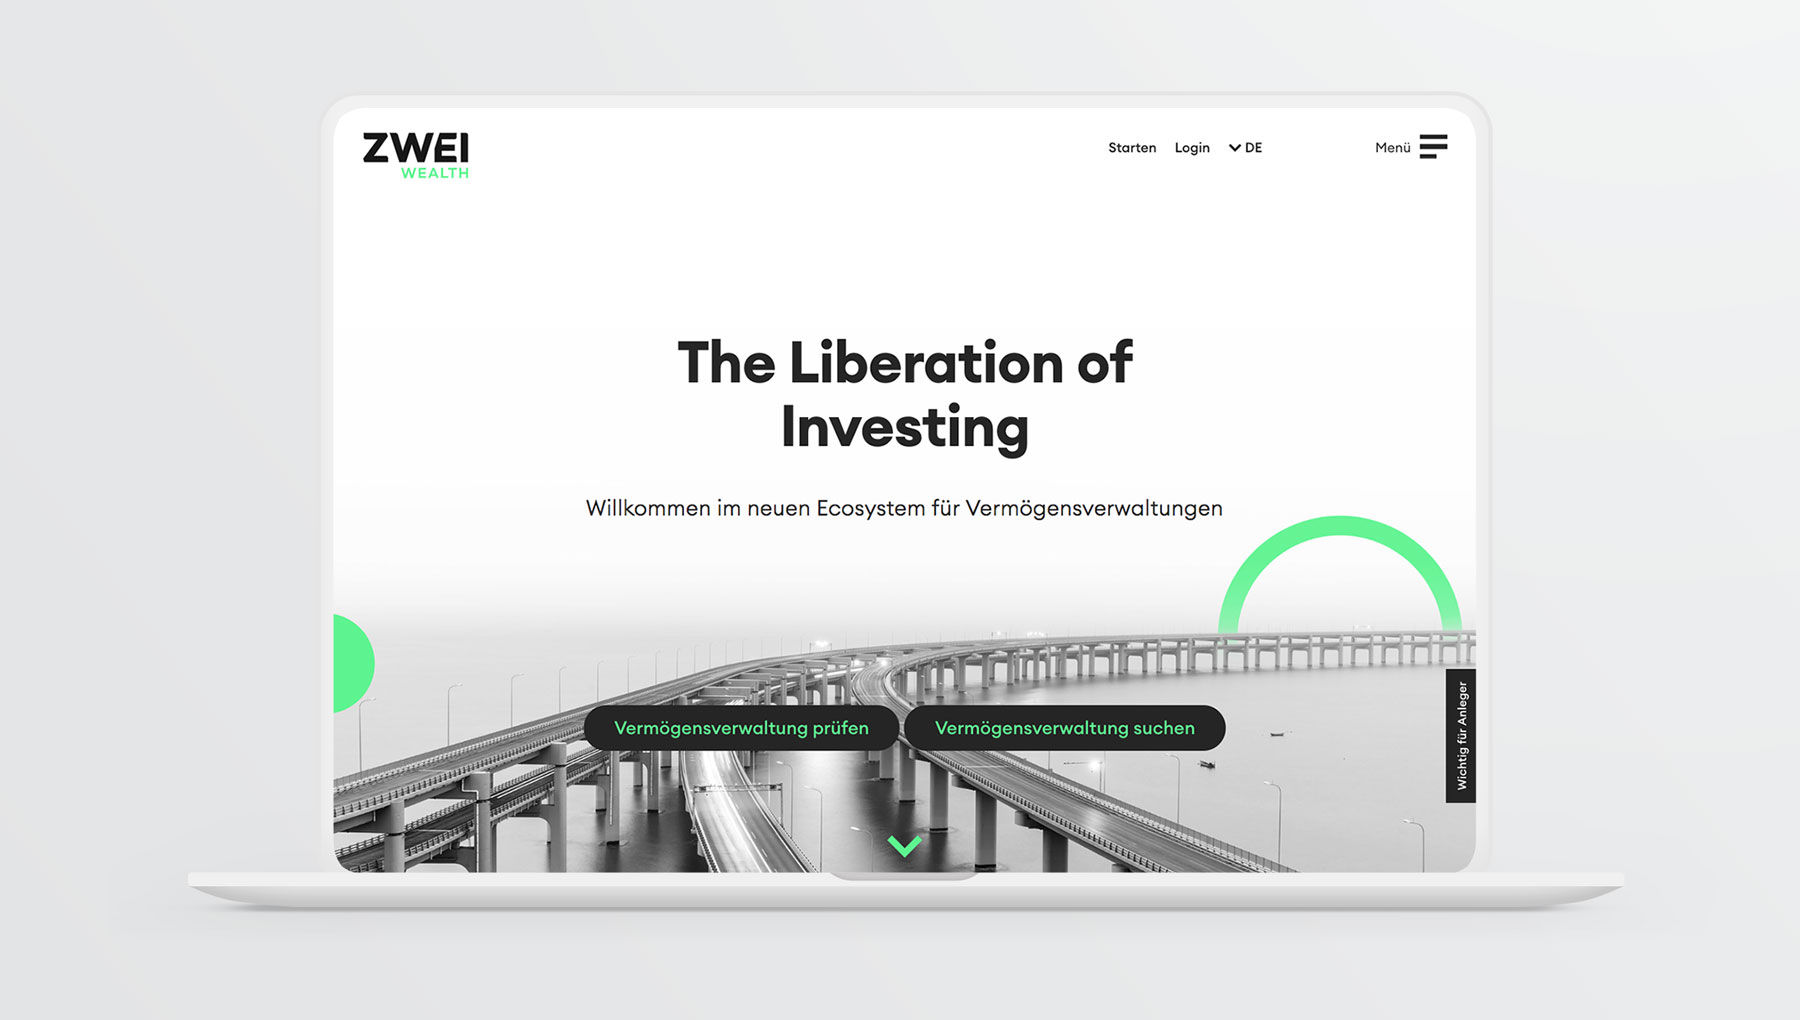 ZWEI Wealth Website